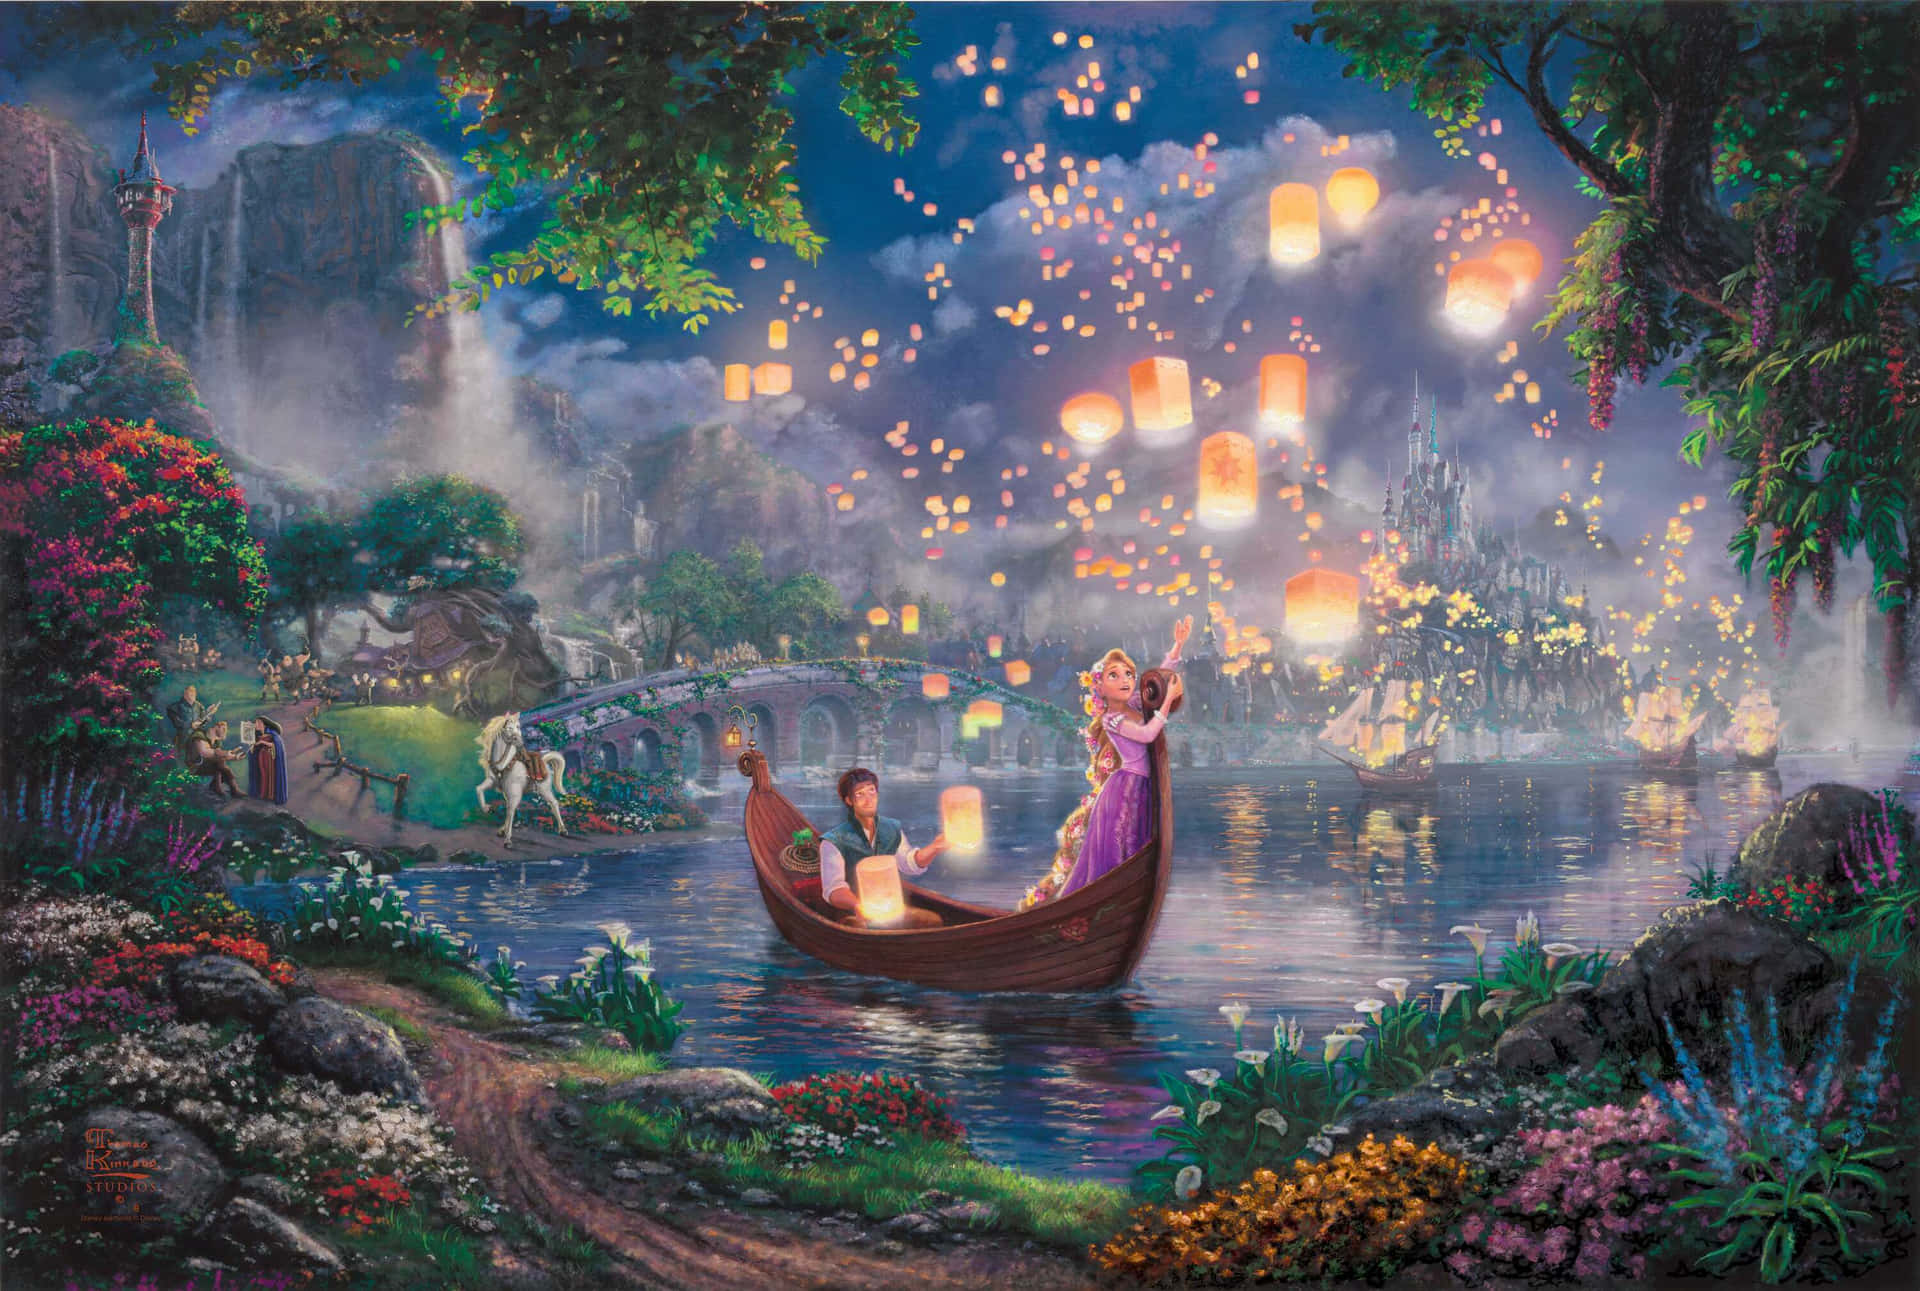 Fondode Pantalla De Disney Con Flynn Rider Y Rapunzel En Un Barco. Fondo de pantalla